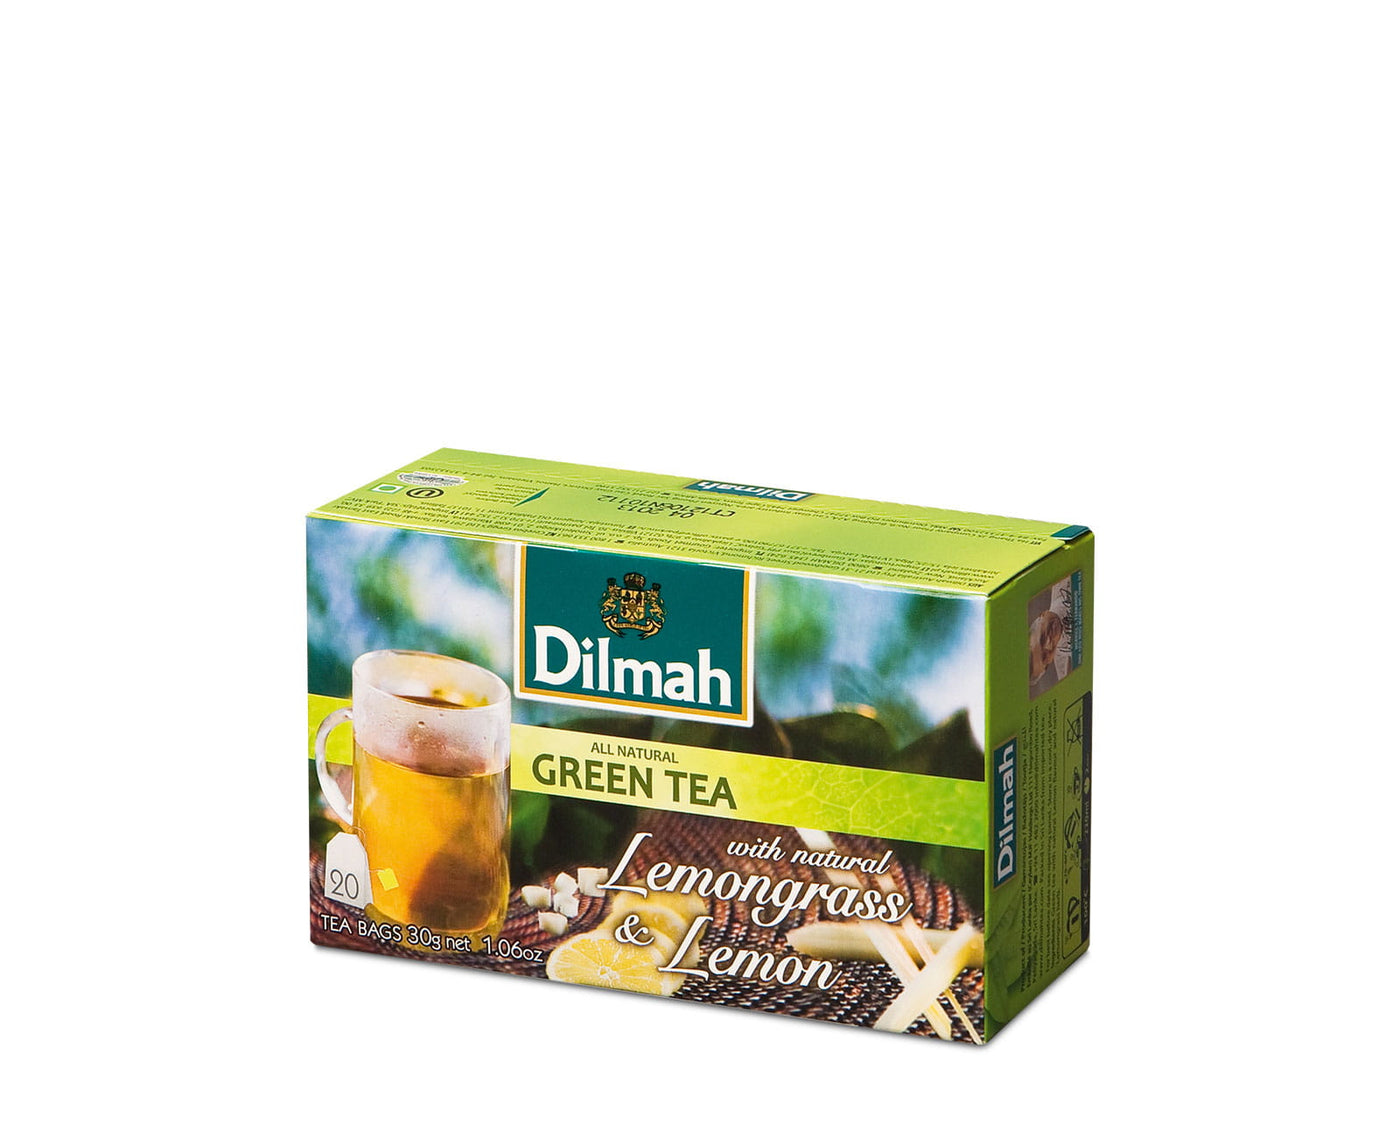 Dilmah Tag Lemongrass Green Tea 30g